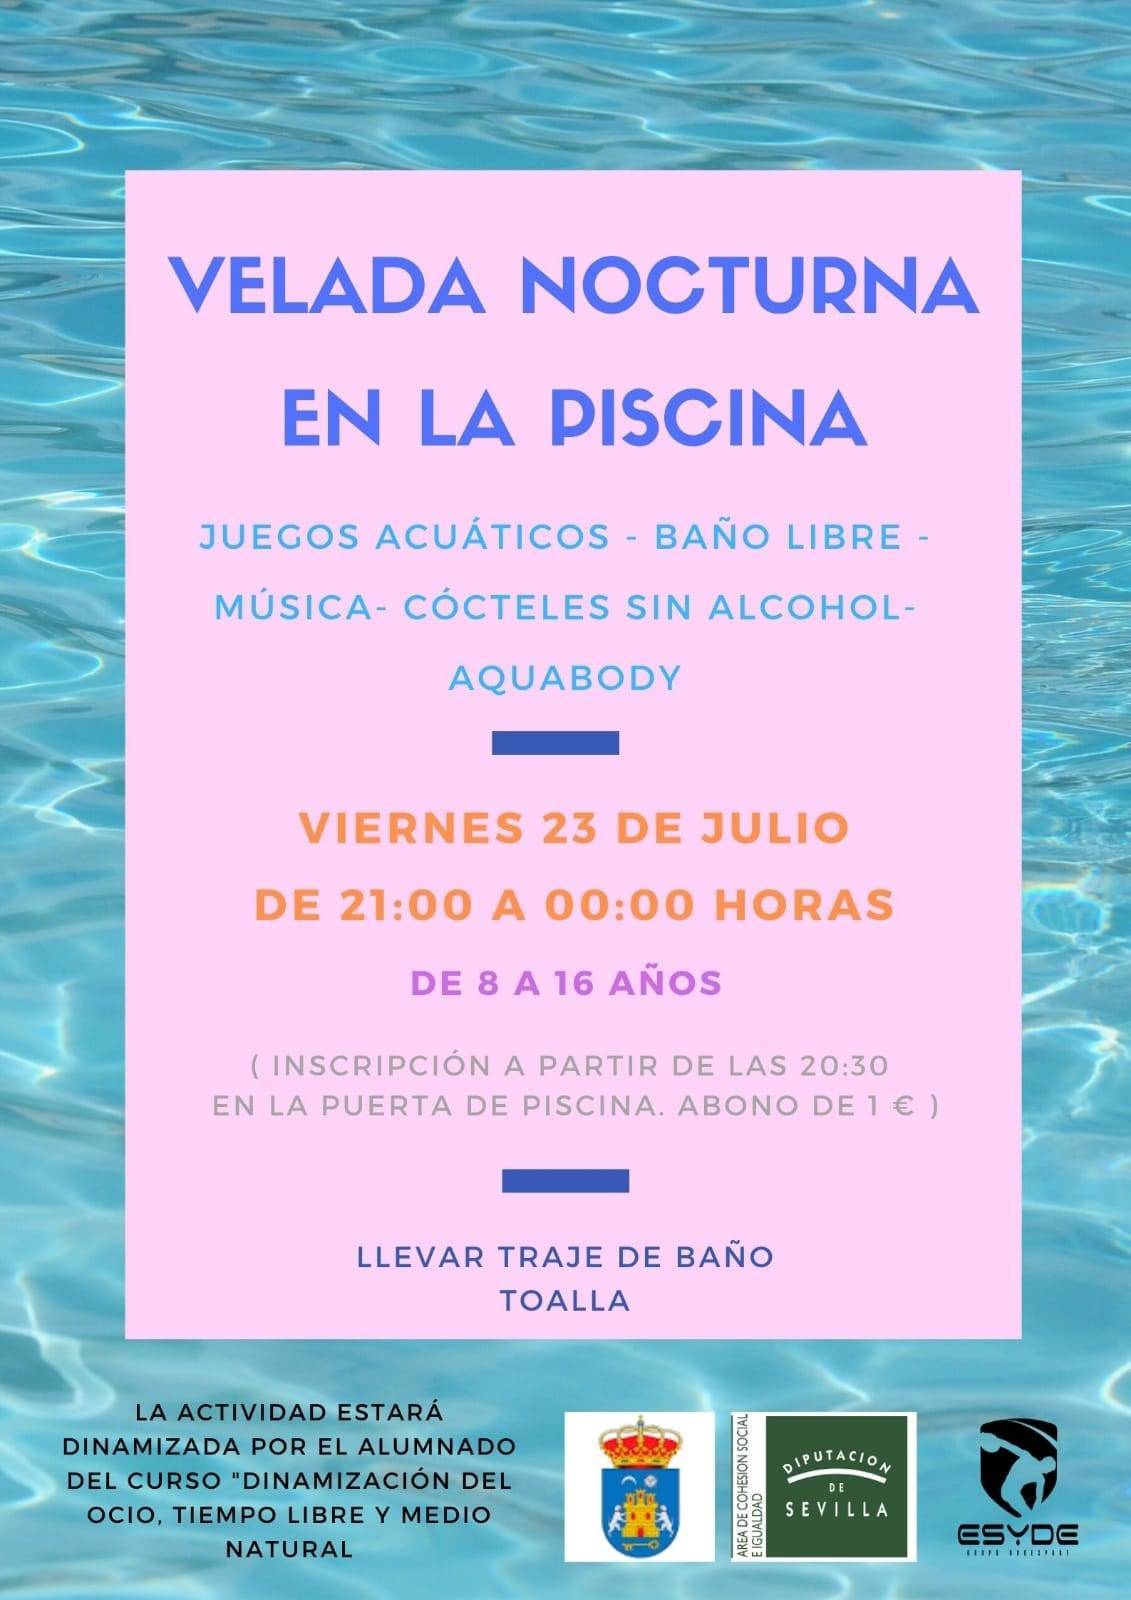 Velada nocturna en la piscina (2021) - Alanís (Sevilla)